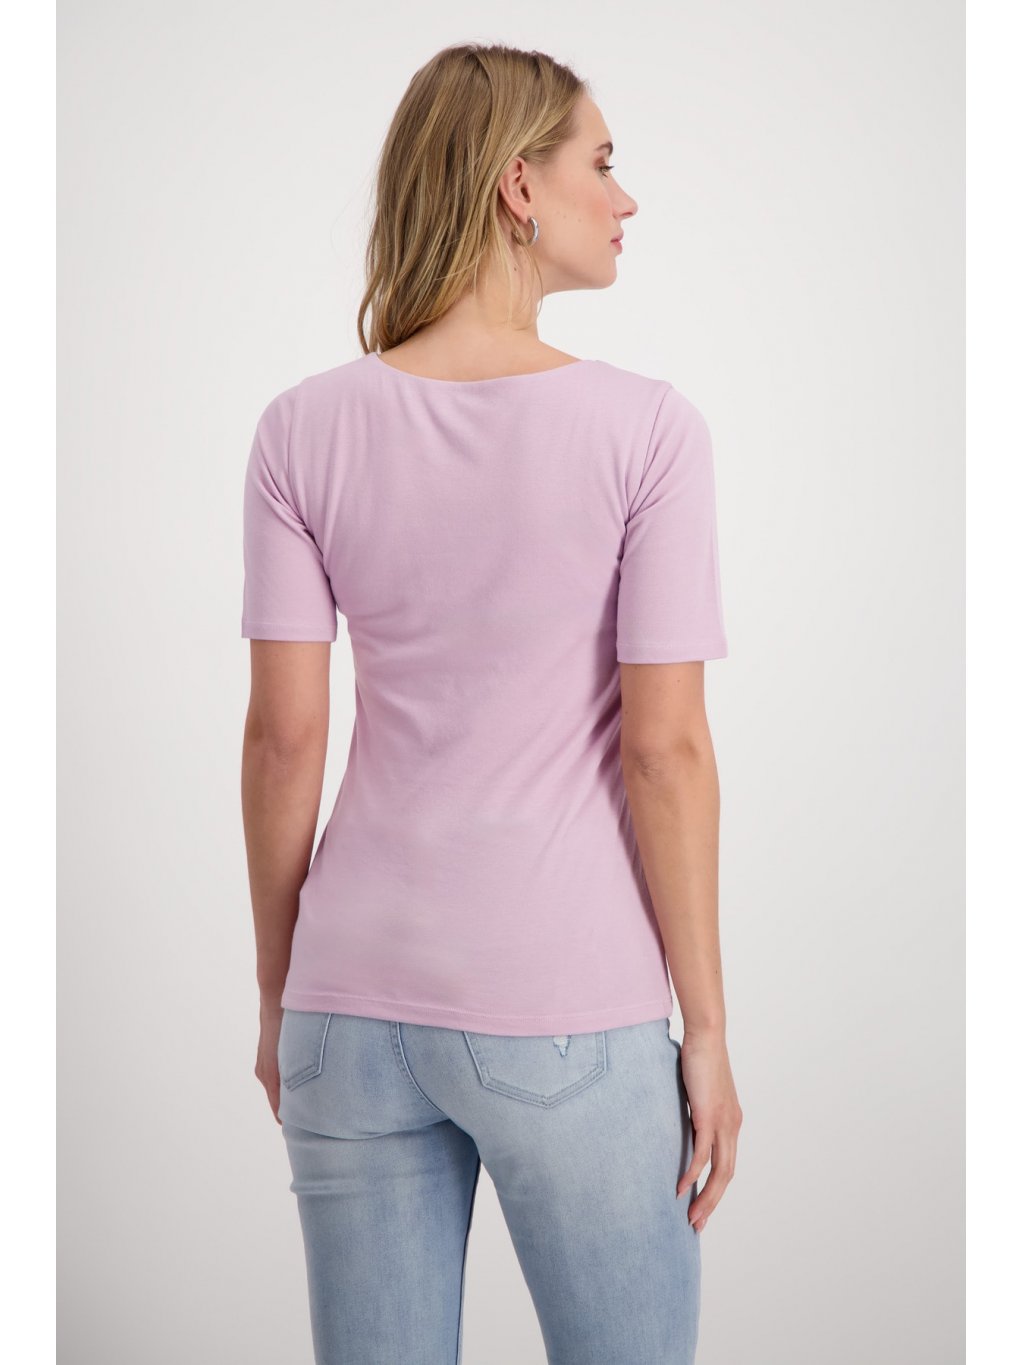 Tričko Monari 8372 lila basic s krátkým rukávem 